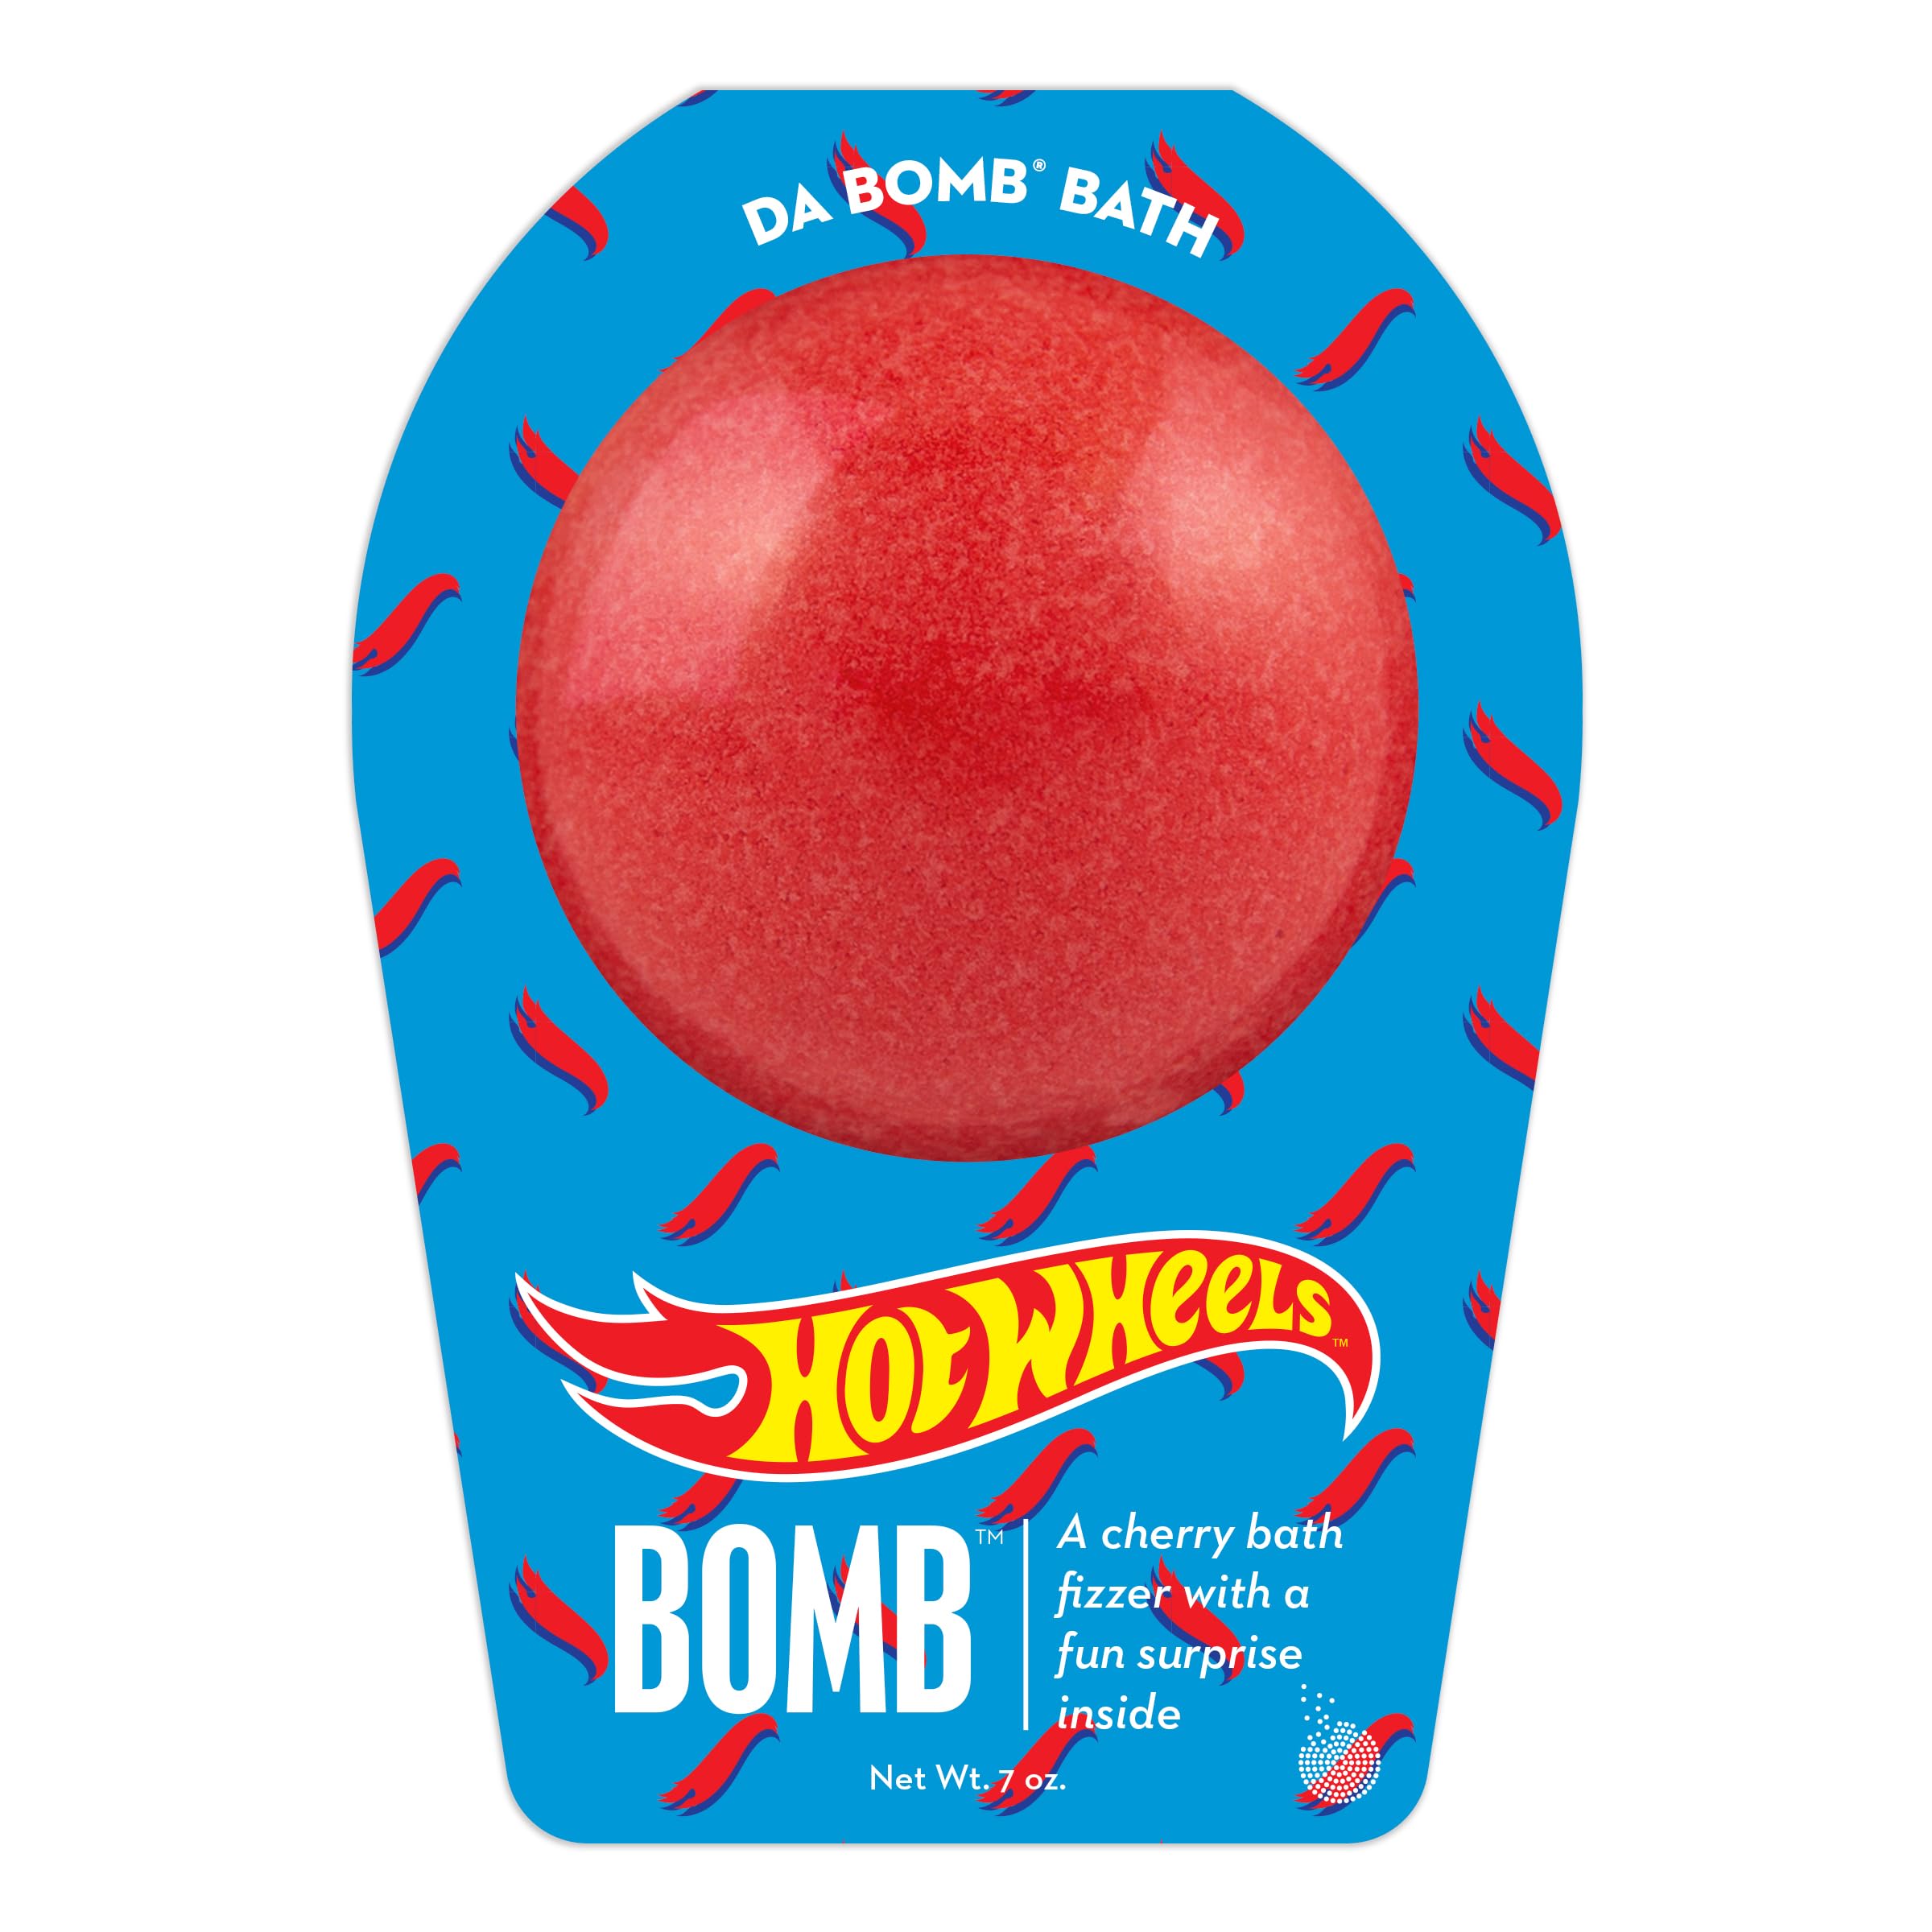 DA BOMB Hot Wheels Red Bath Bomb, 7oz